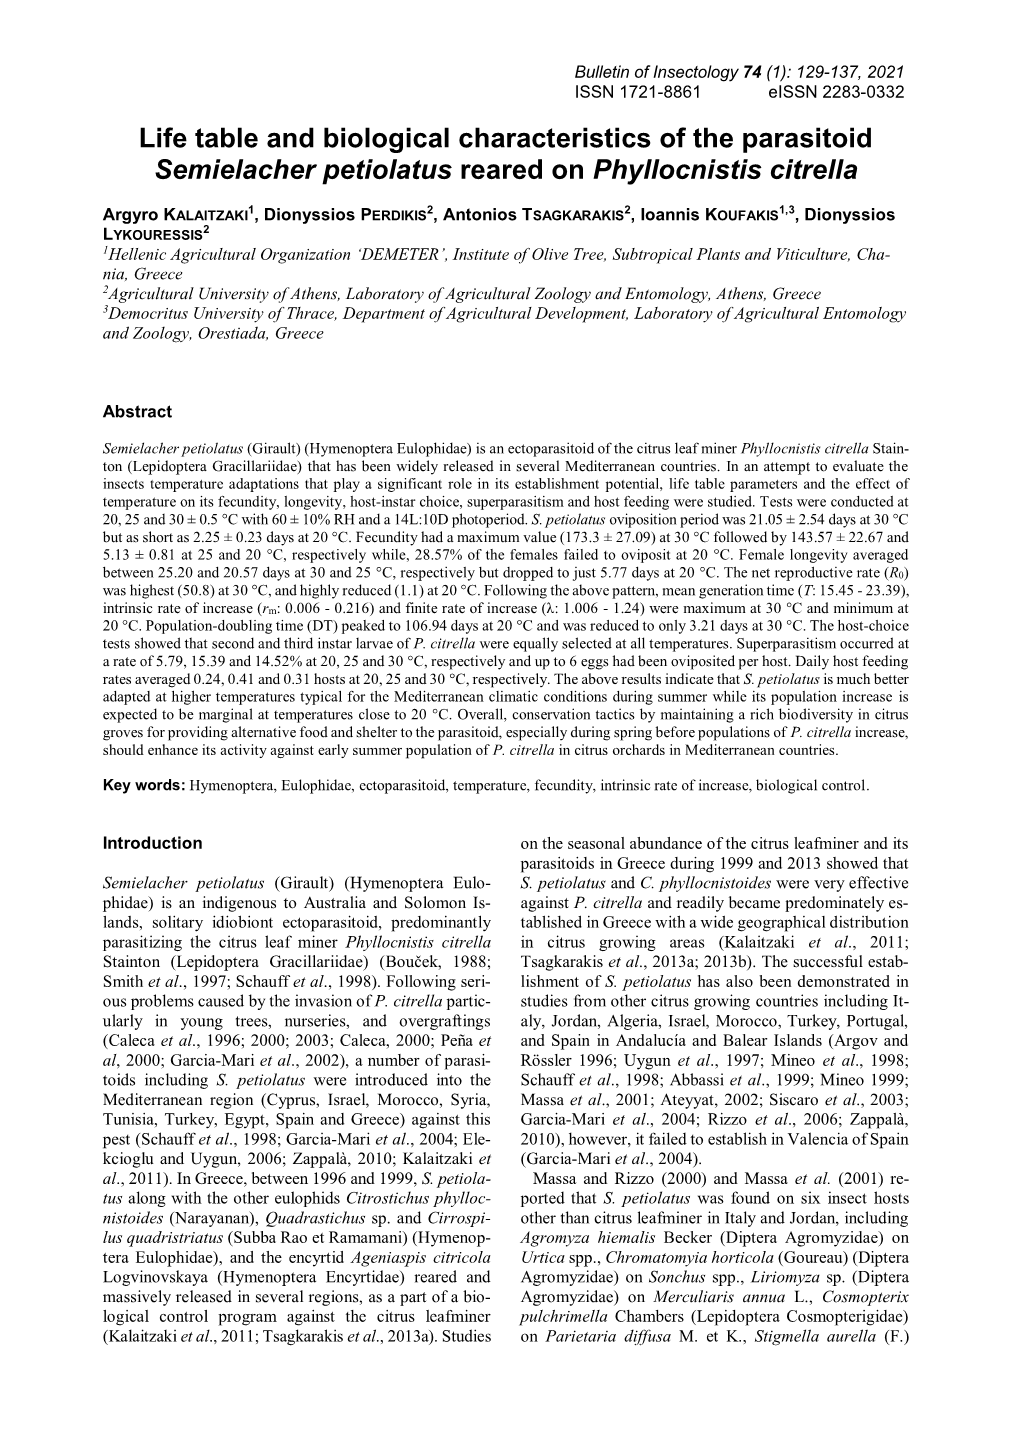 Life Table and Biological Characteristics of the Parasitoid Semielacher Petiolatus Reared on Phyllocnistis Citrella